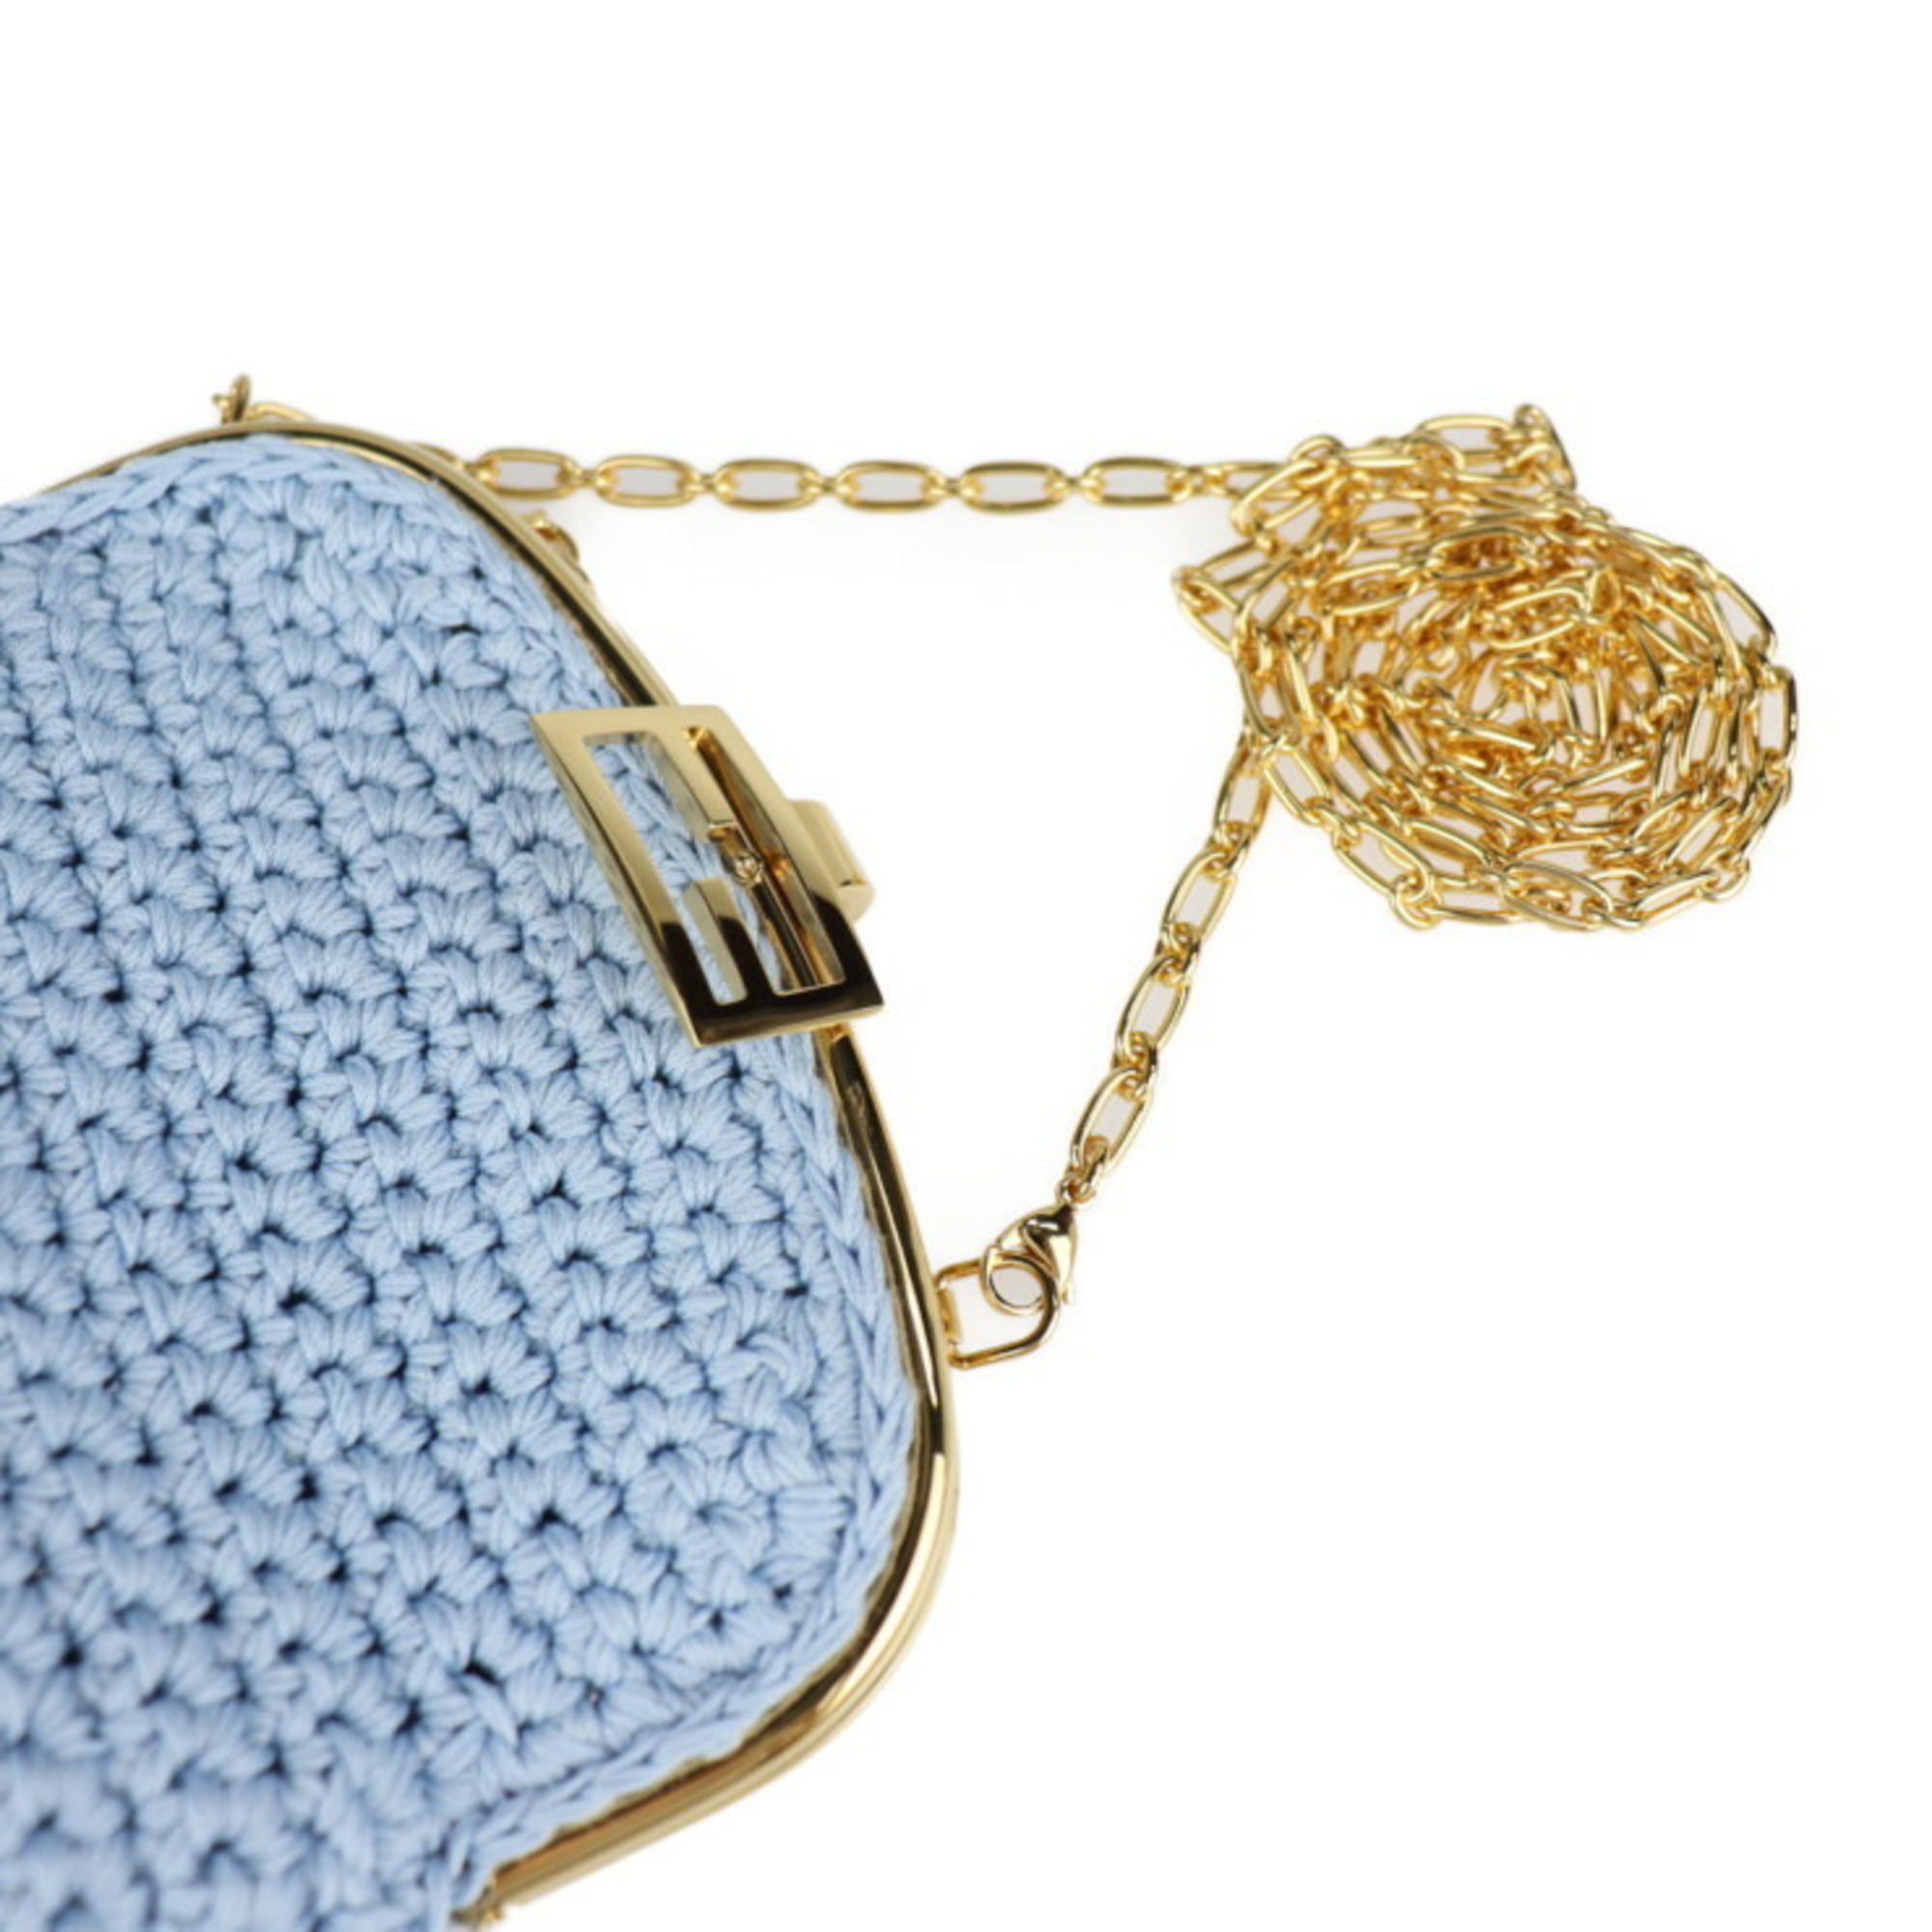 FENDI Fendi Baguette Smartphone Bag Shoulder 7AR966 Cotton Light Blue 2WAY Clutch Fabric Mini